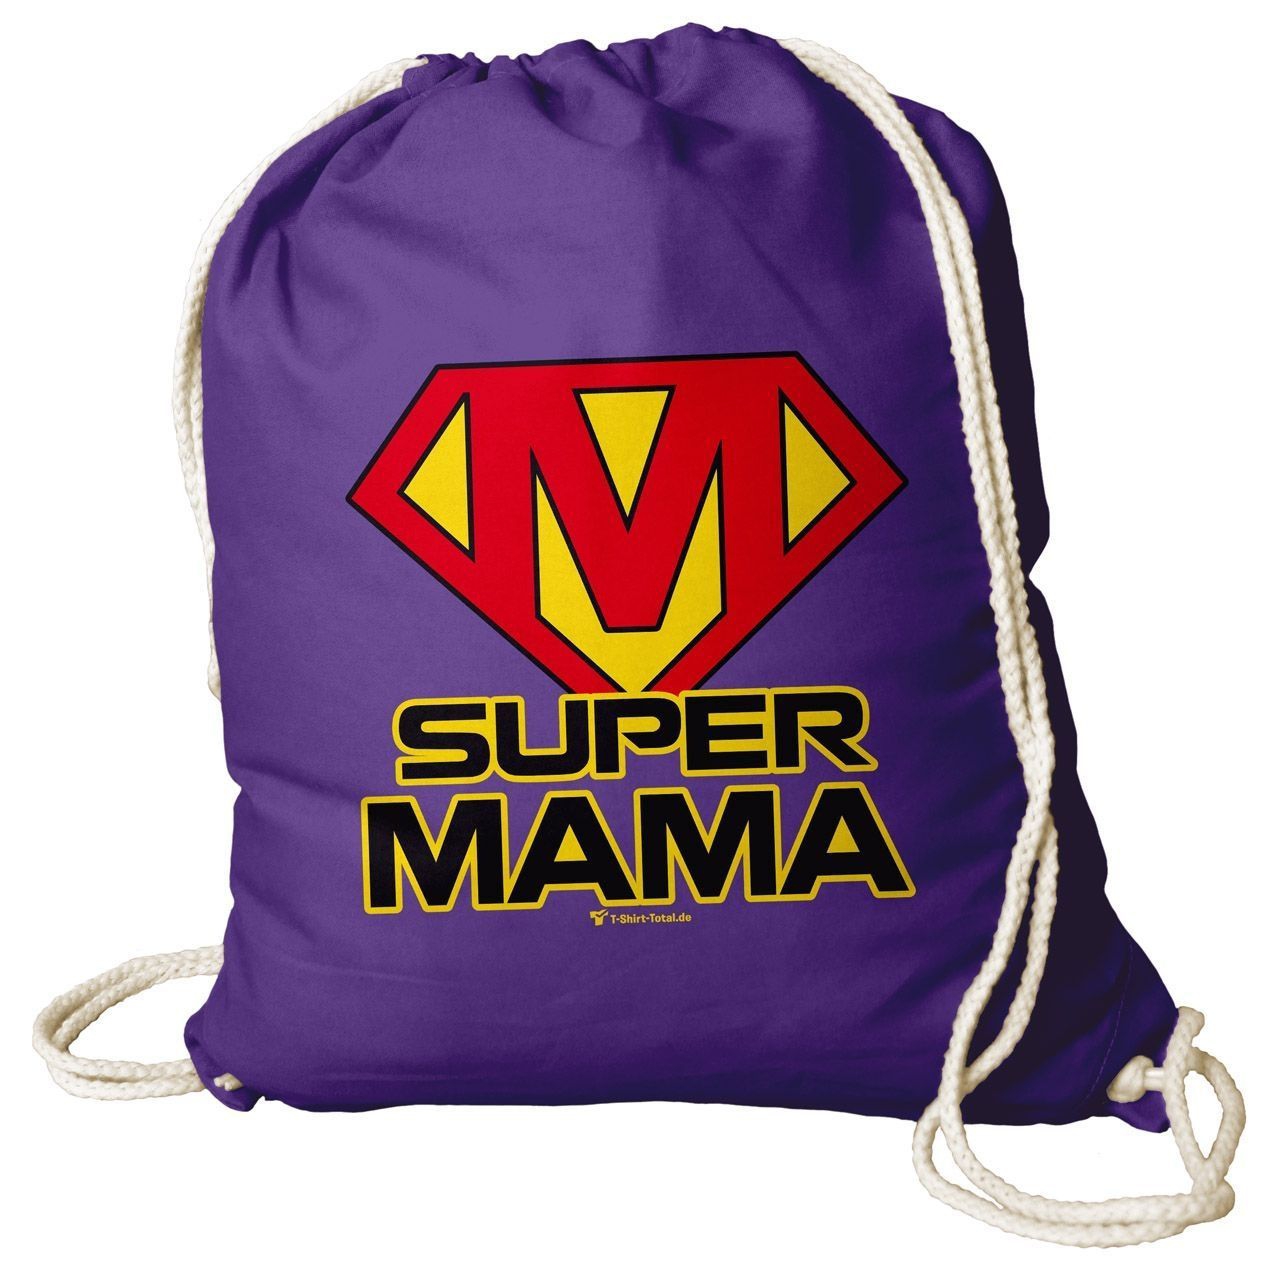 Super Mama Rucksack Beutel lila